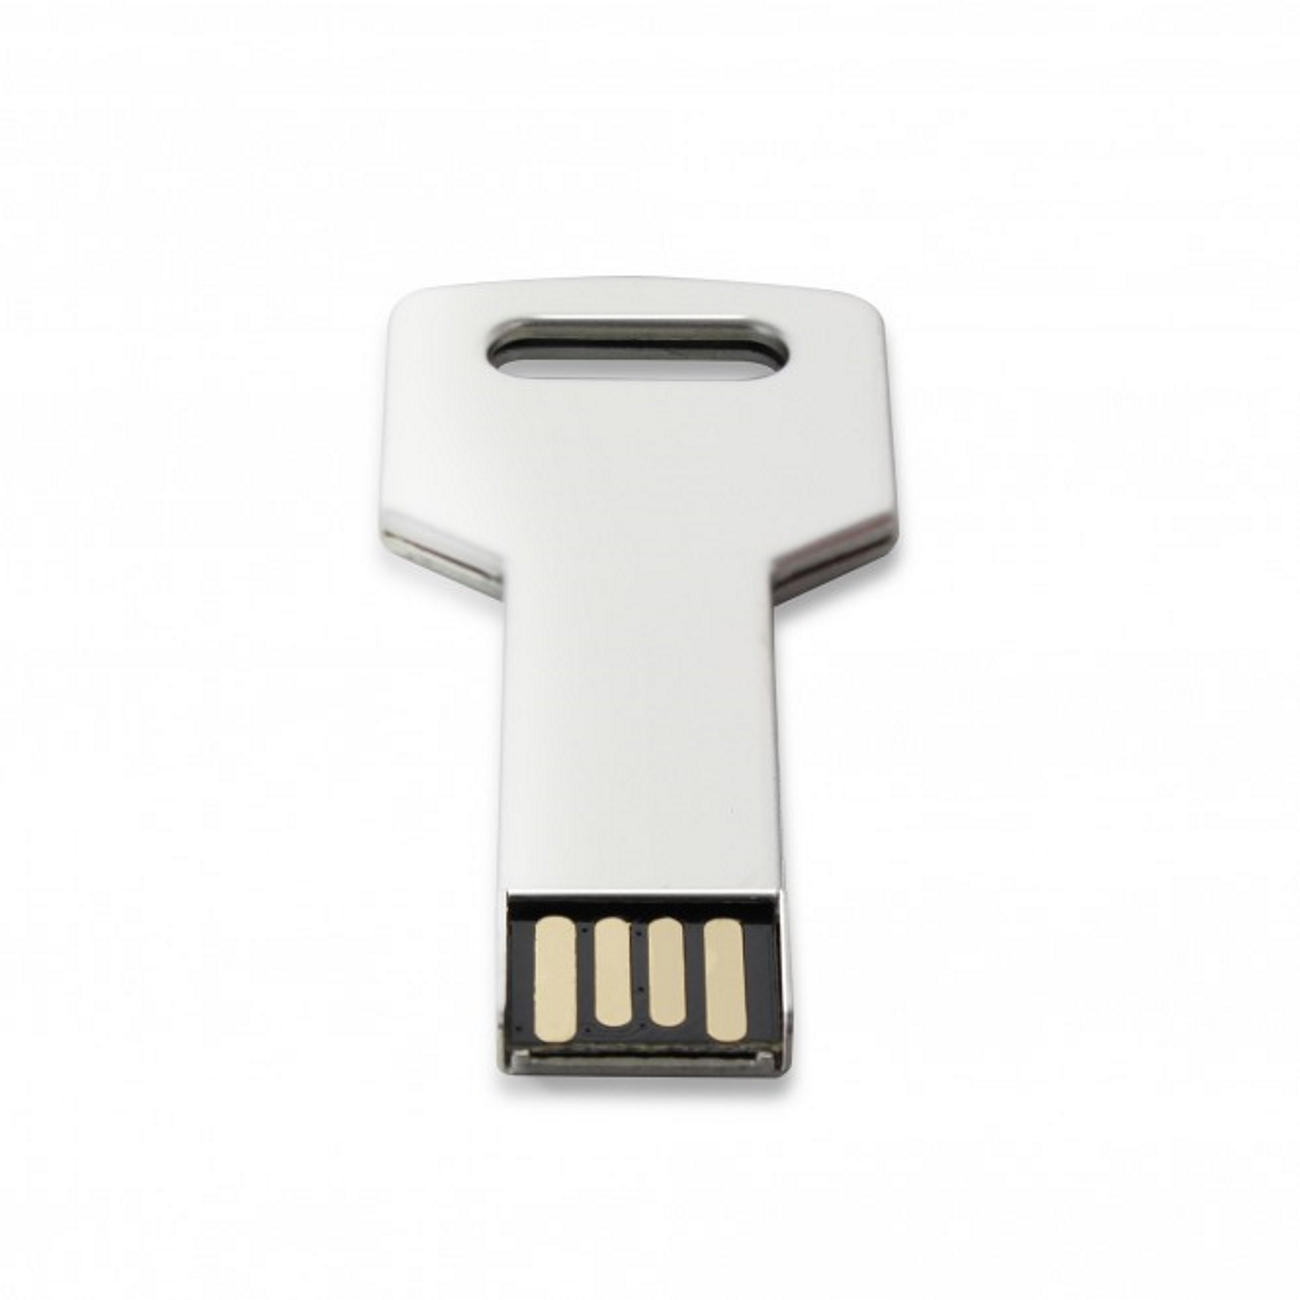 ®Schlüssel GERMANY 128 USB GB) USB-Stick Key (Silber,